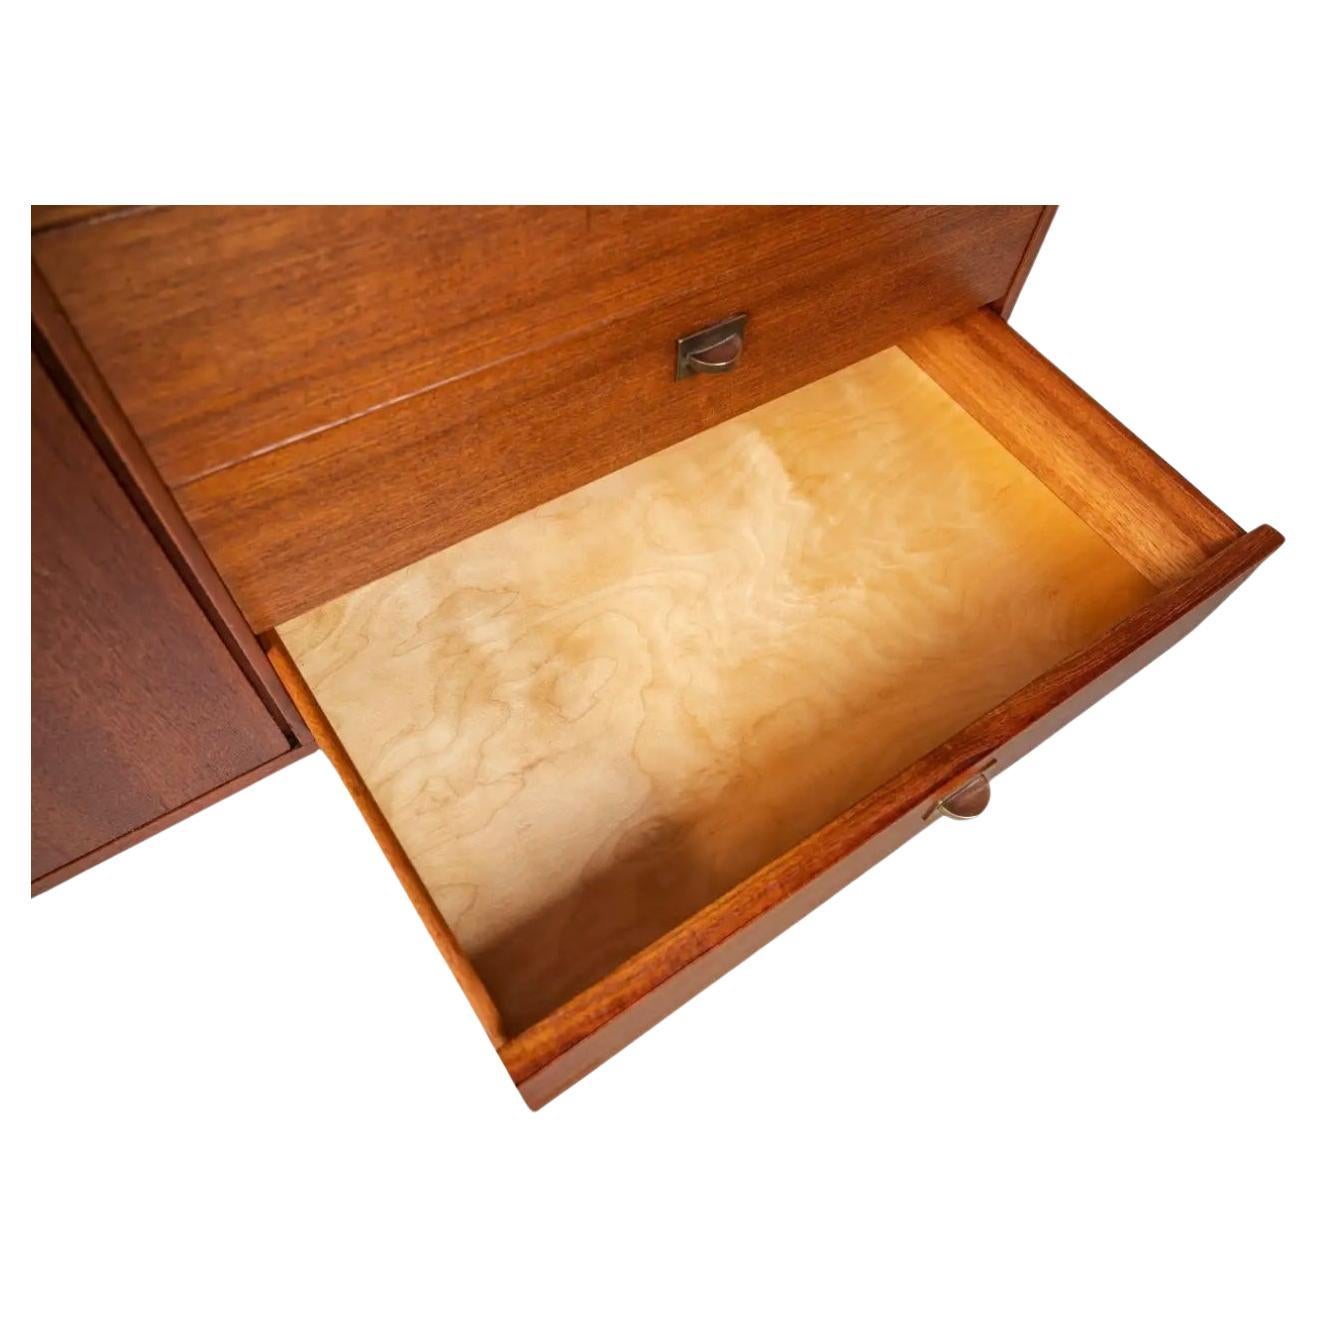 Danish Mid century danish modern credenza flip down desk bookcase shelf unit by Lovig For Sale